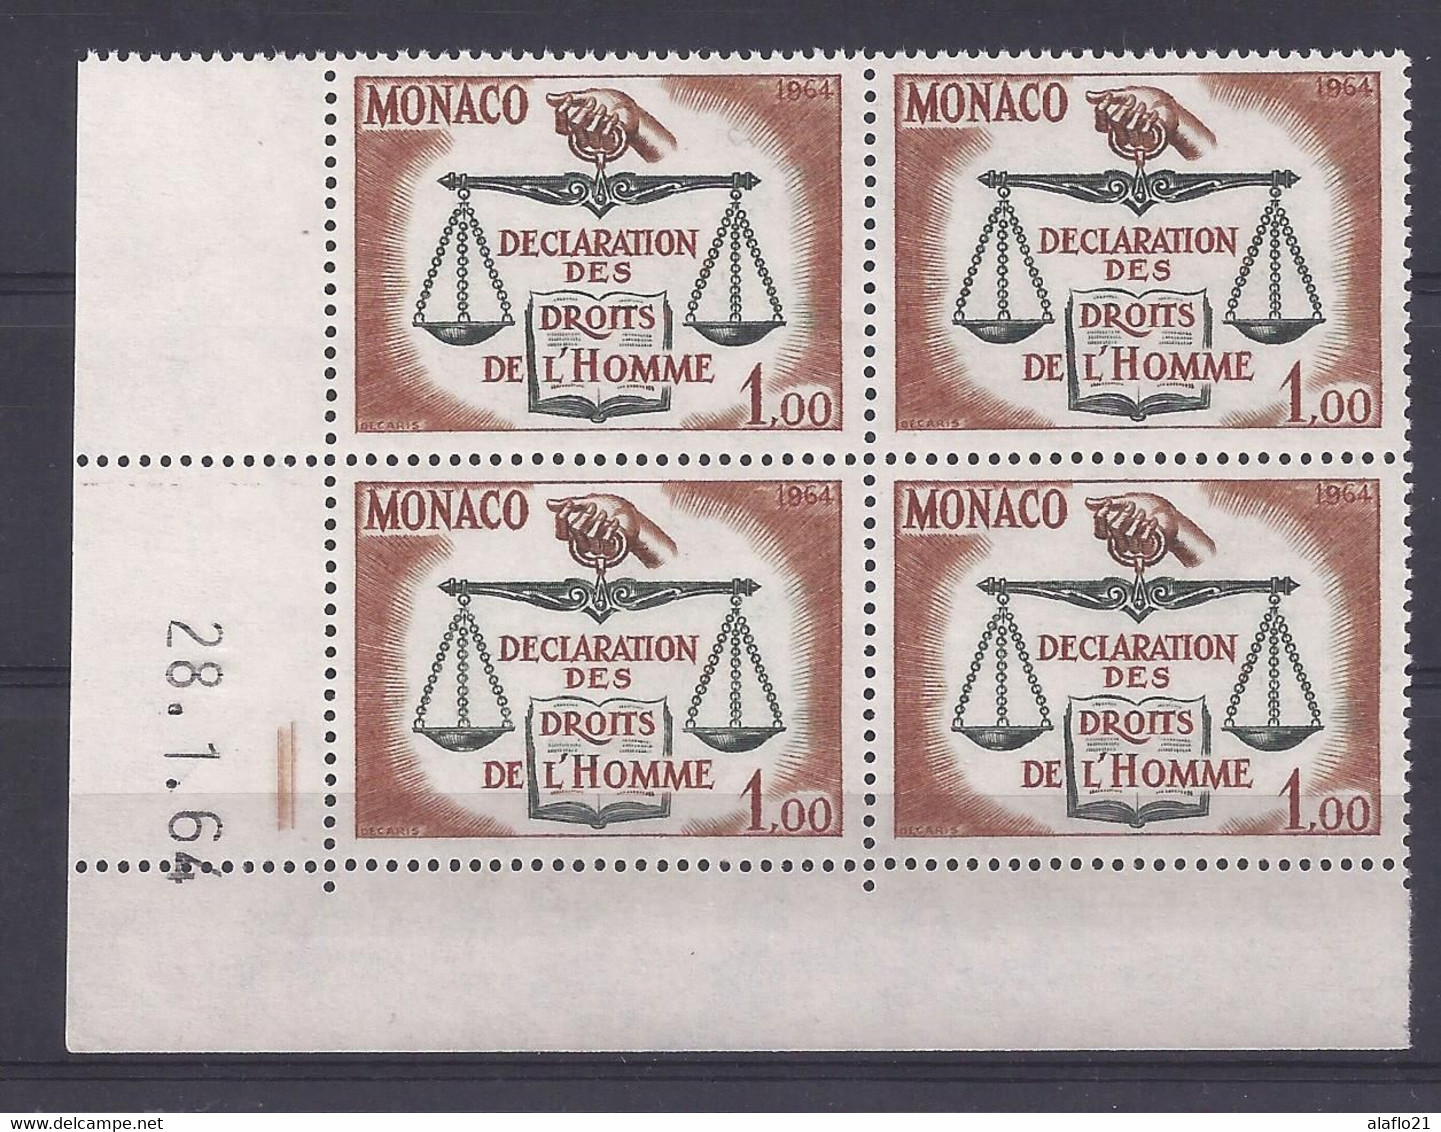 MONACO N° 661 - Bloc De 4 COIN DATE - NEUF SANS CHARNIERE - 28/1/64 - Ungebraucht